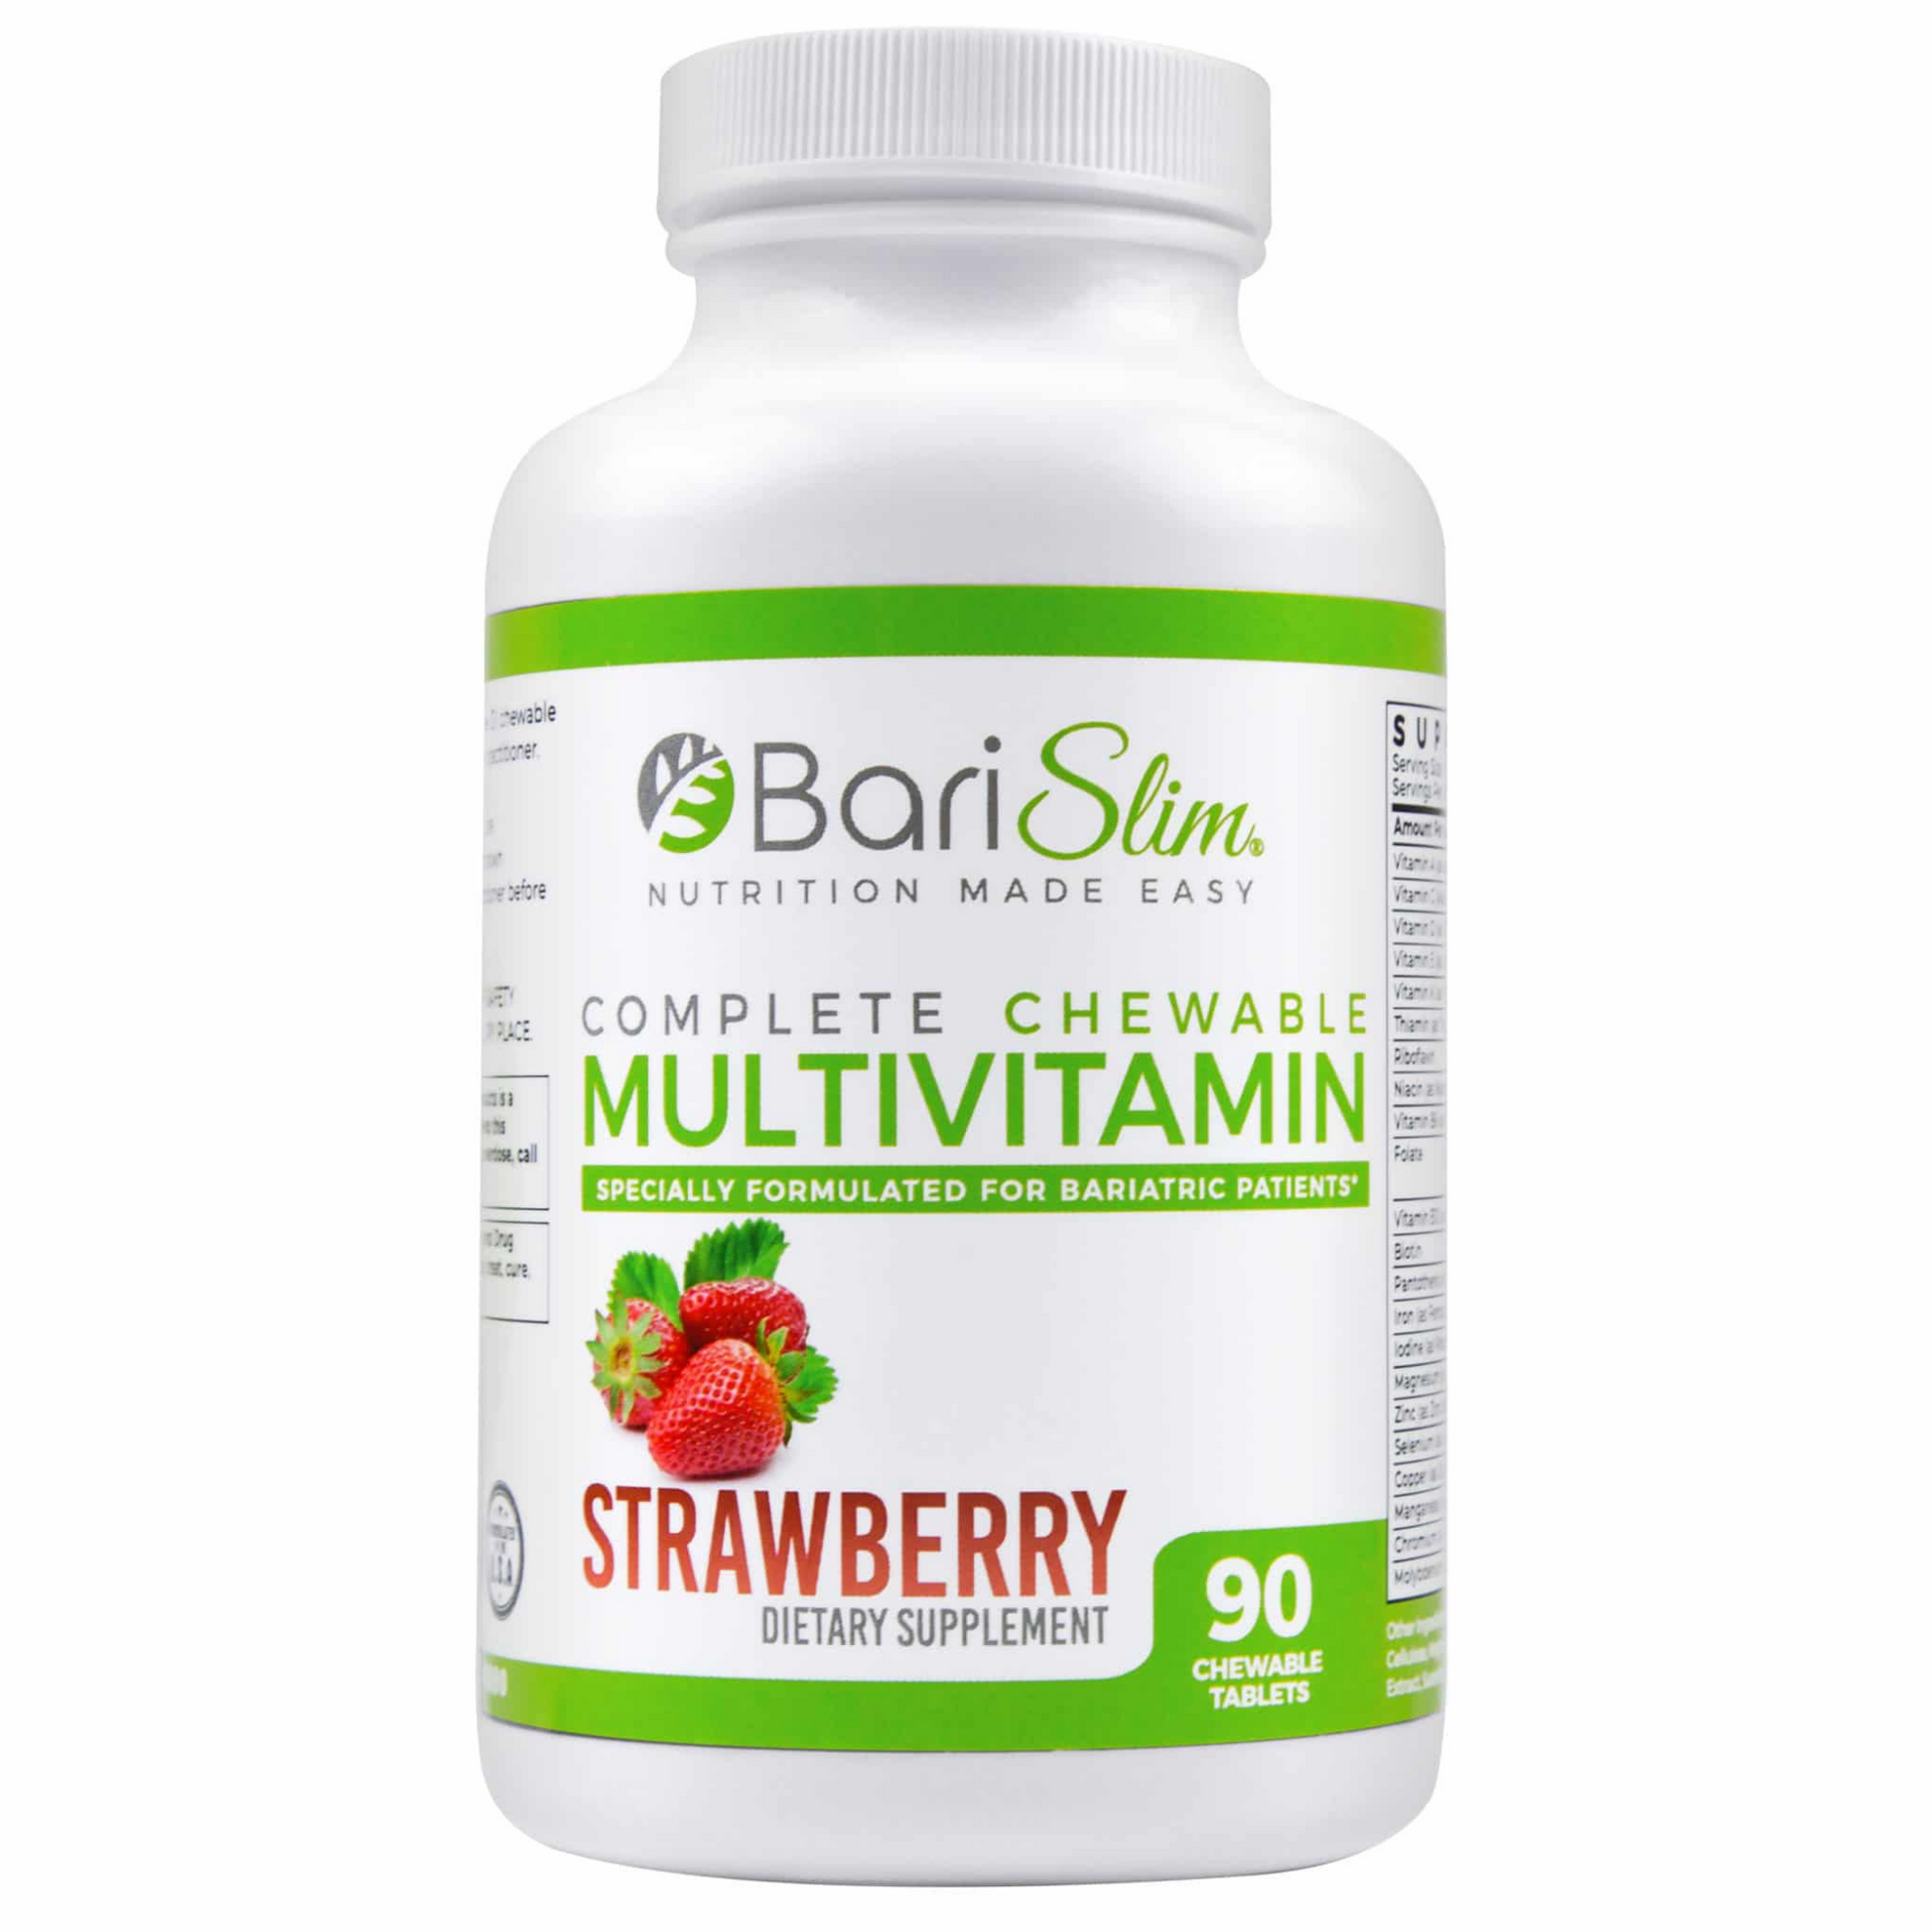 Complete Bariatric Chewable Multivitamin - strawberry flavor dietary supplement